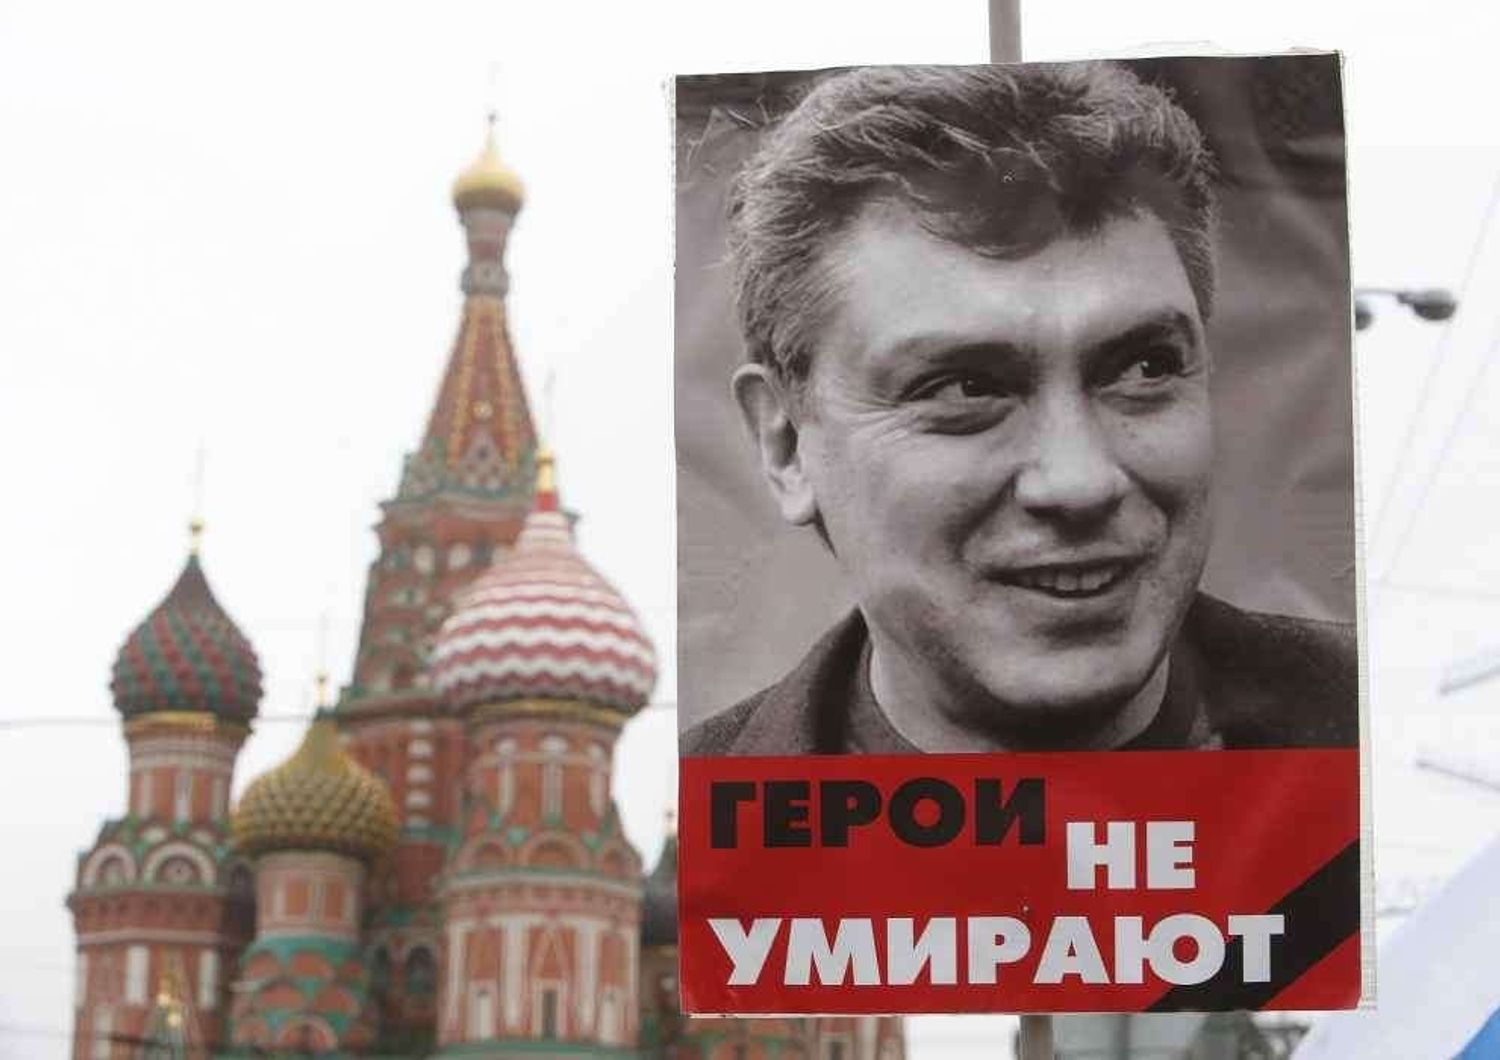 Nemtsov: "Io non ho paura", in migliaia marciano a Mosca - Foto